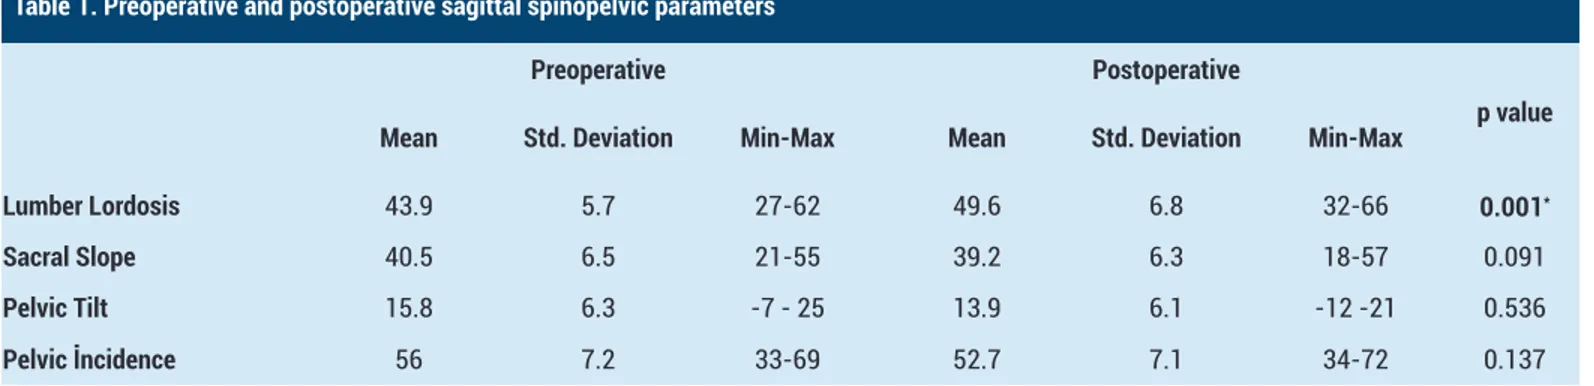 Table 1. Preoperative and postoperative sagittal spinopelvic parameters 